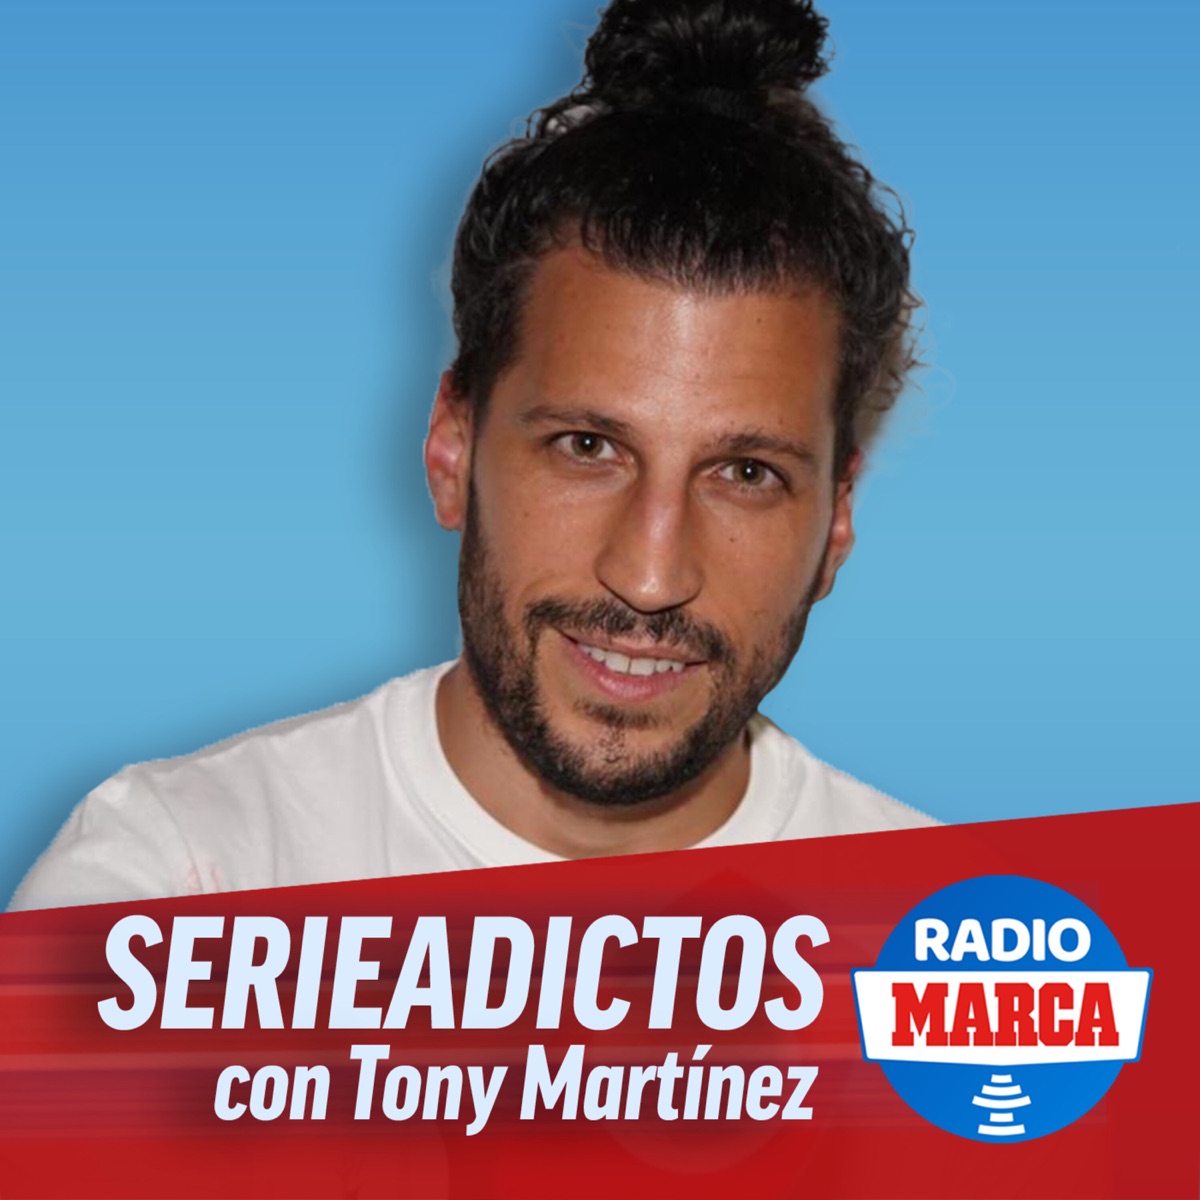 Seriadictos - Podcast de SERIES de Radio MARCA – Podcast – Podtail